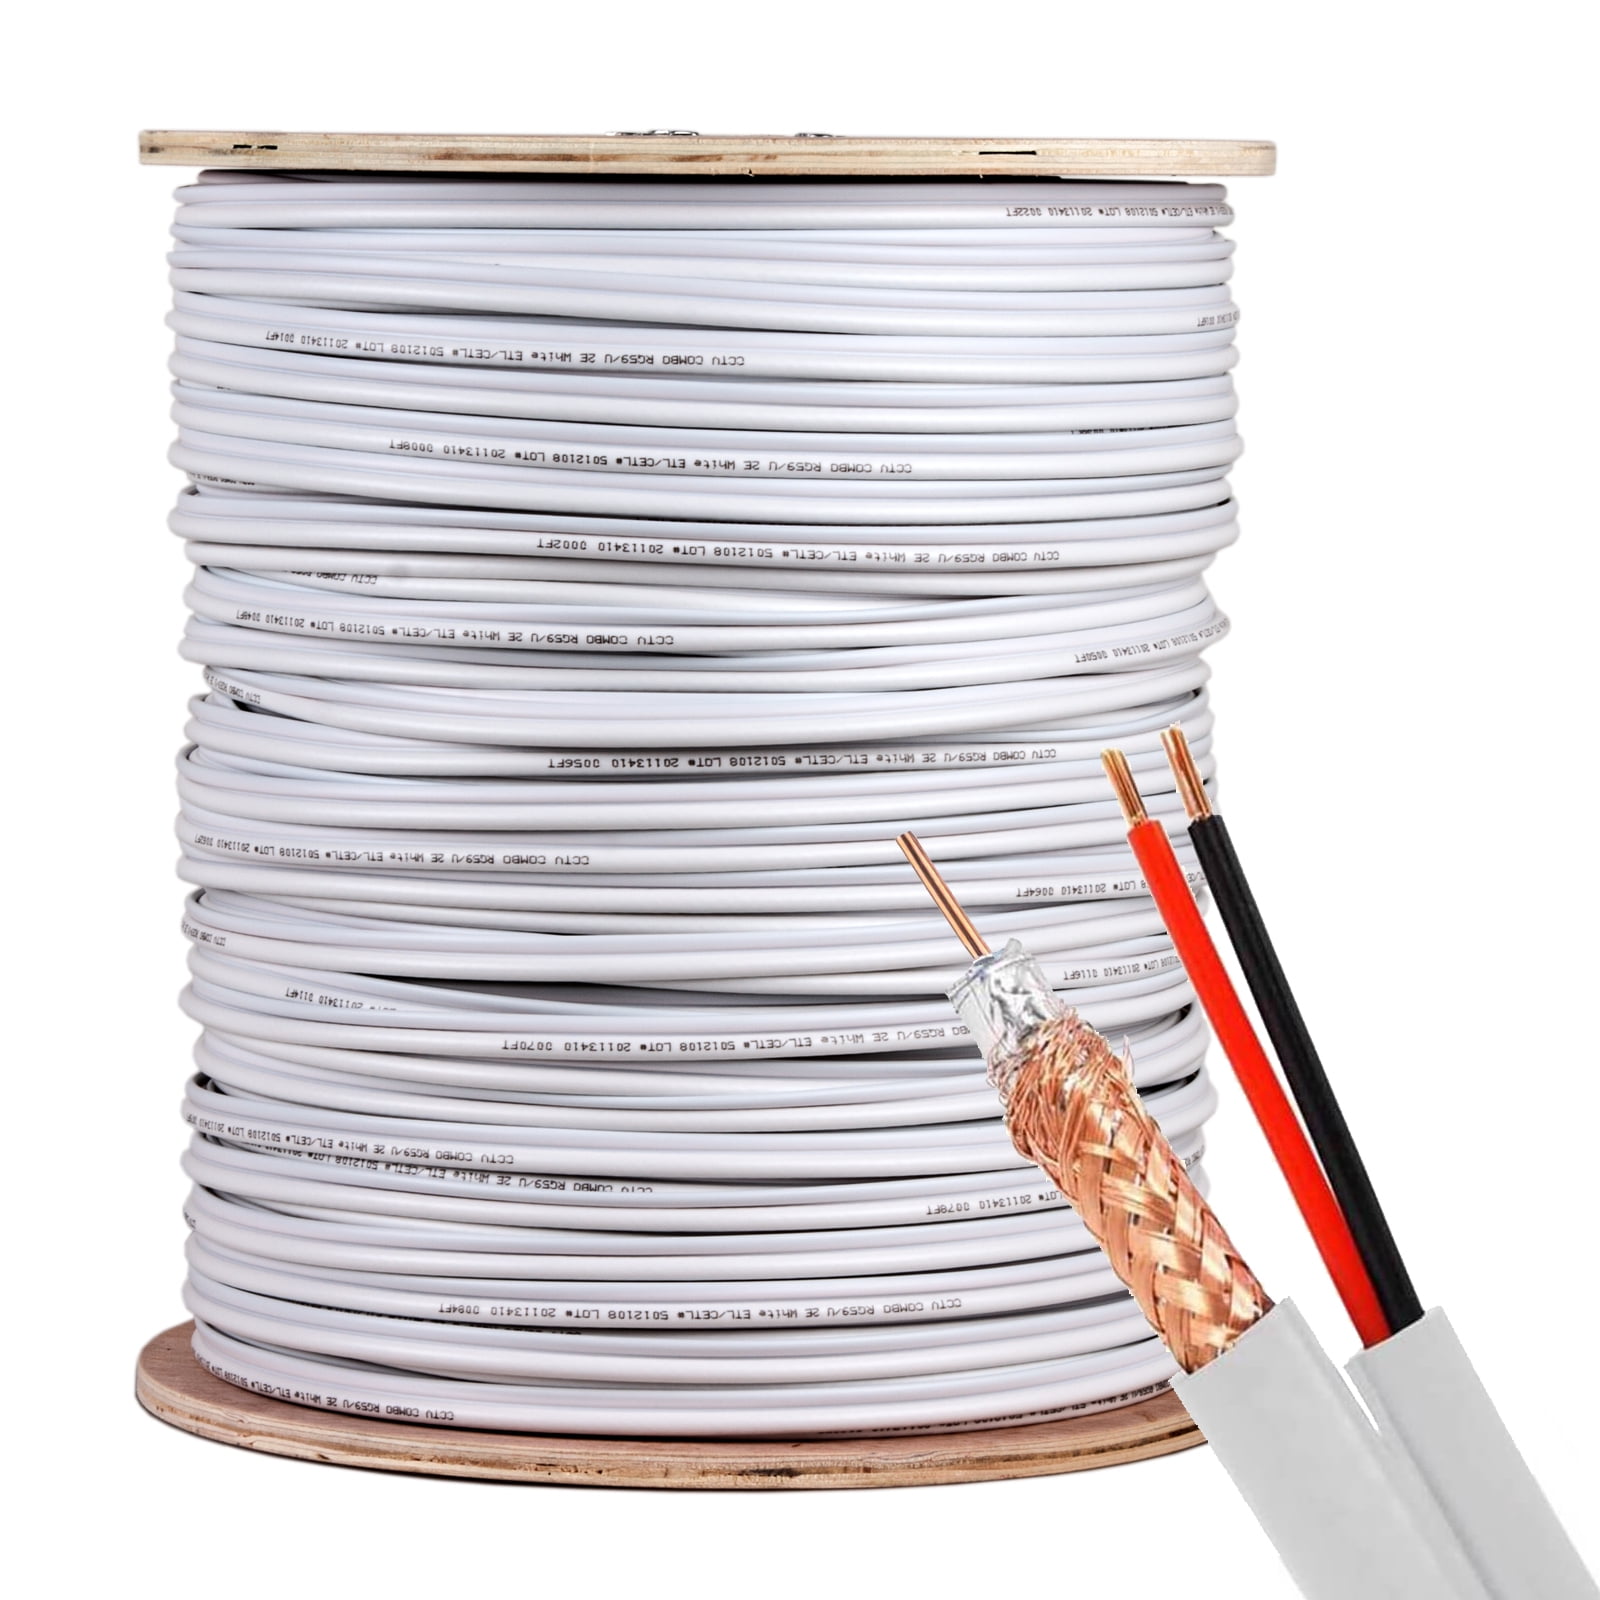 Blast King RG59+2C 100W 100-Feet White Siamese Coaxial Cable 